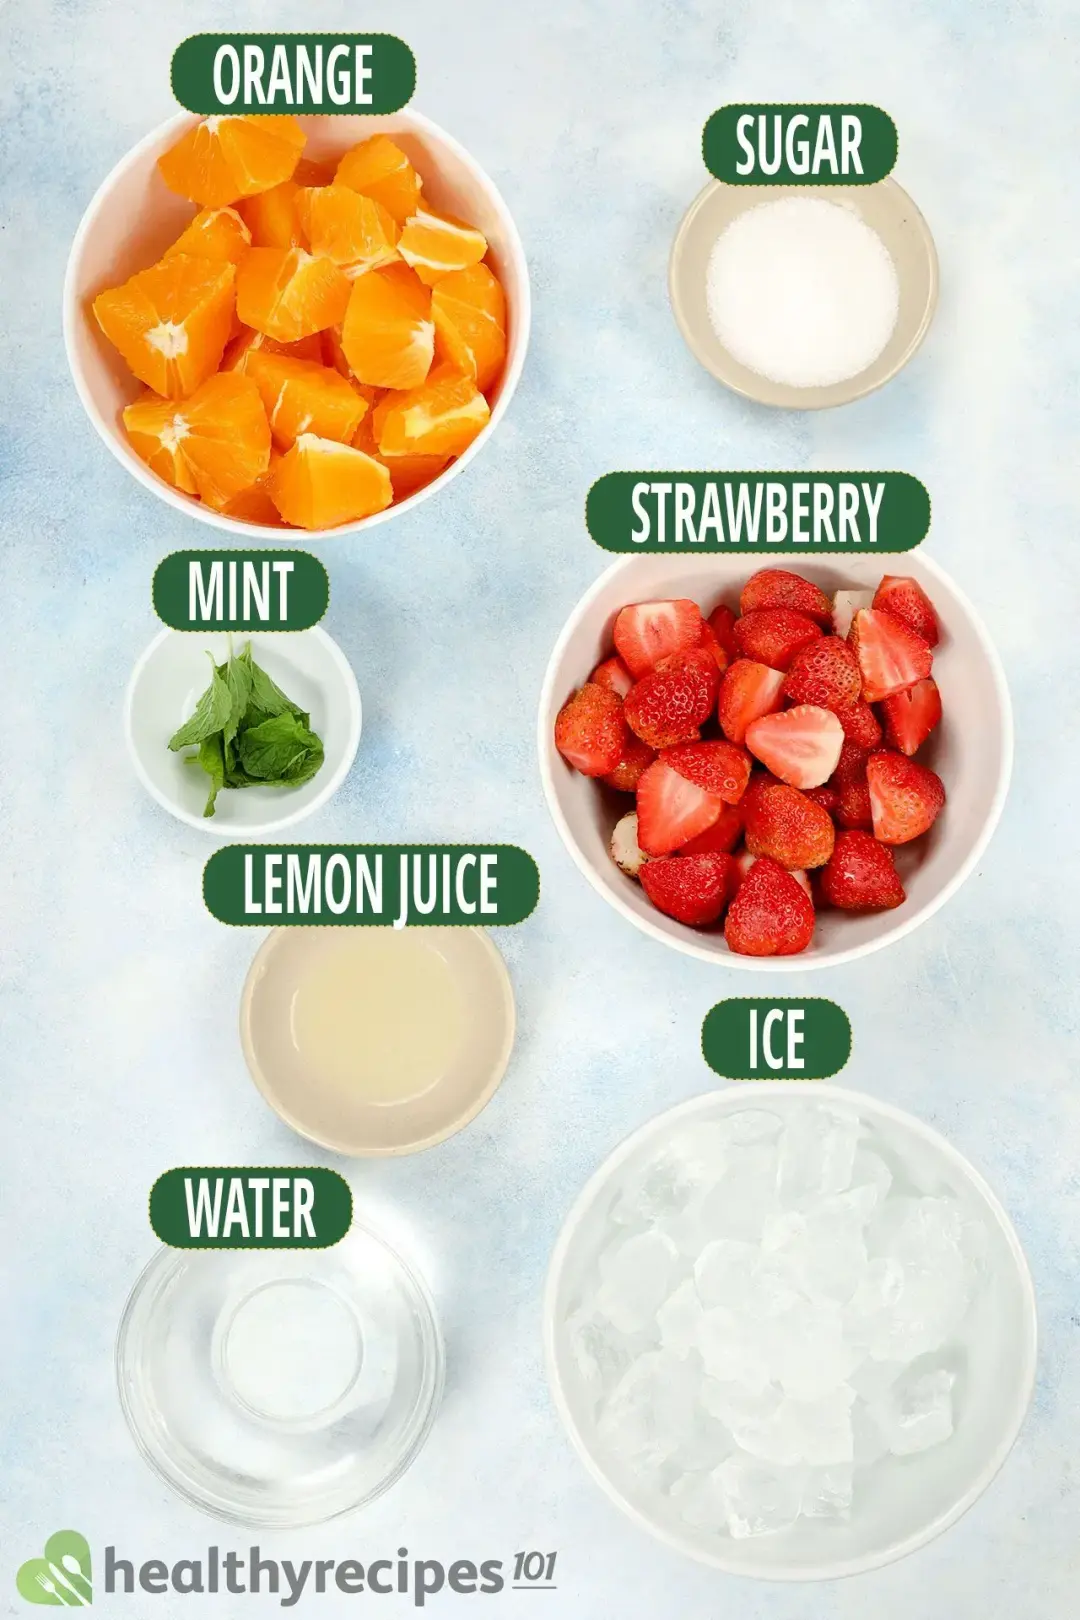 Main Ingredients for Strawberry Orange Juice